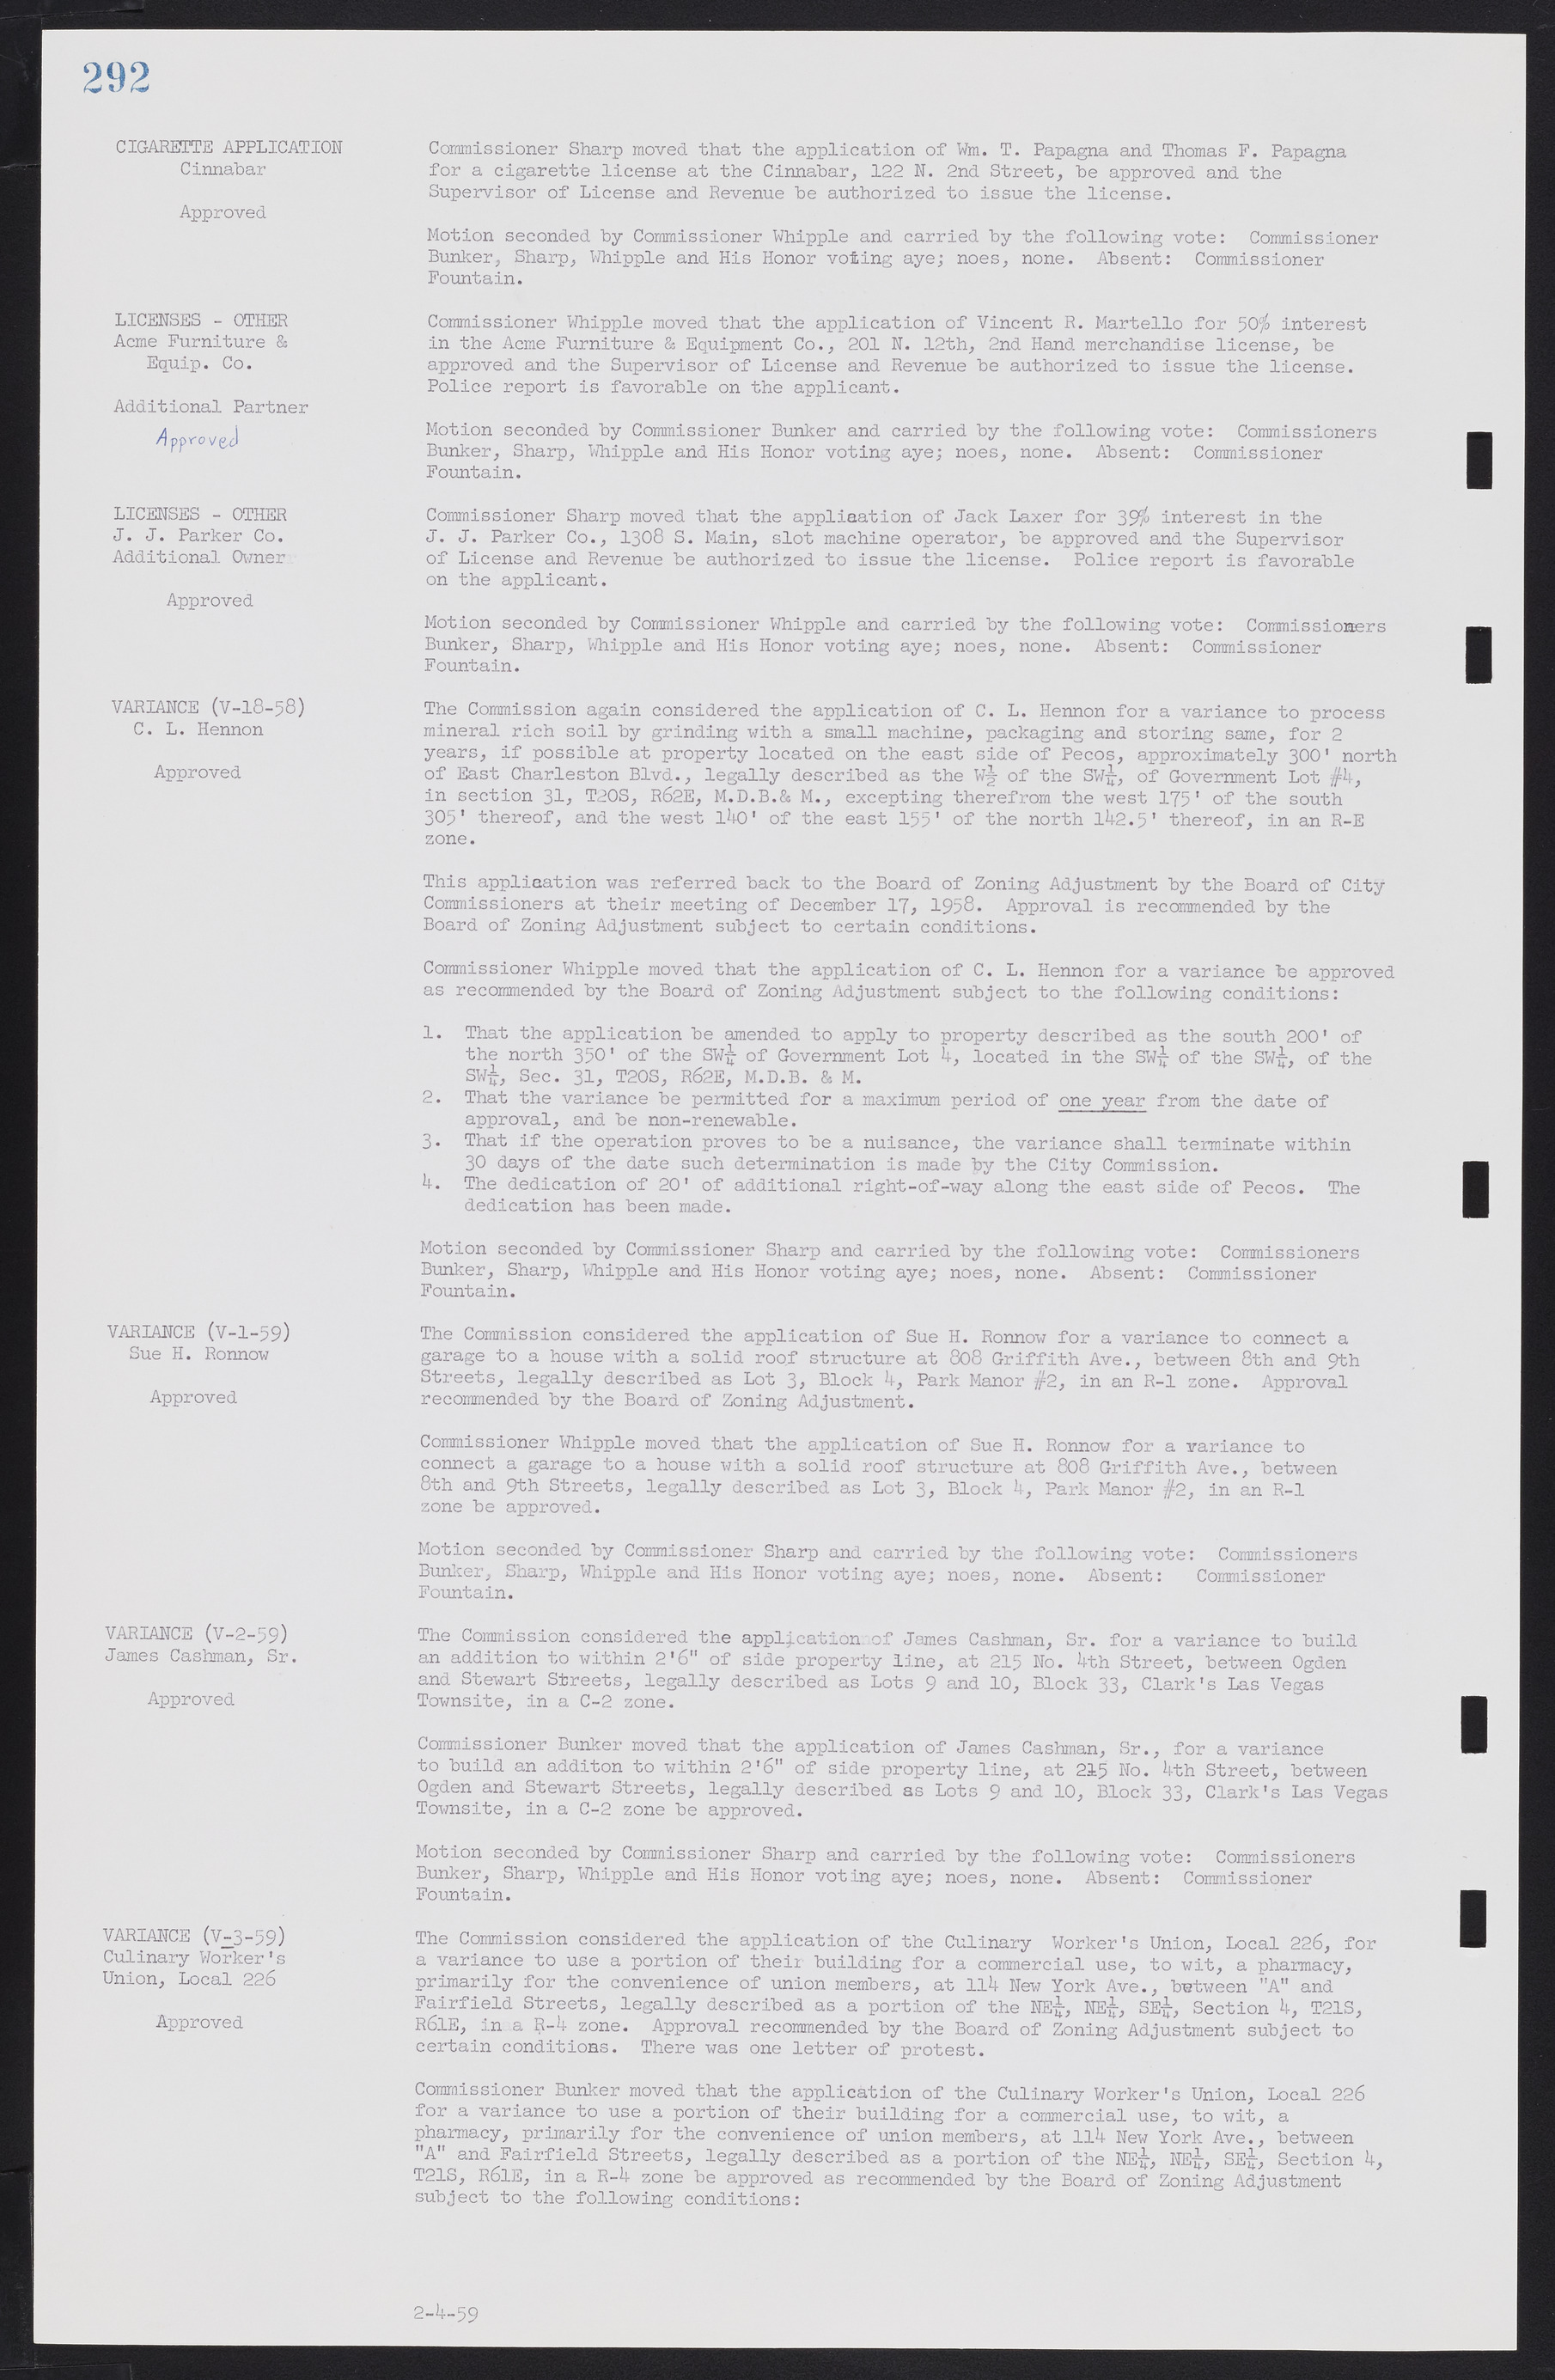 Las Vegas City Commission Minutes, November 20, 1957 to December 2, 1959, lvc000011-300